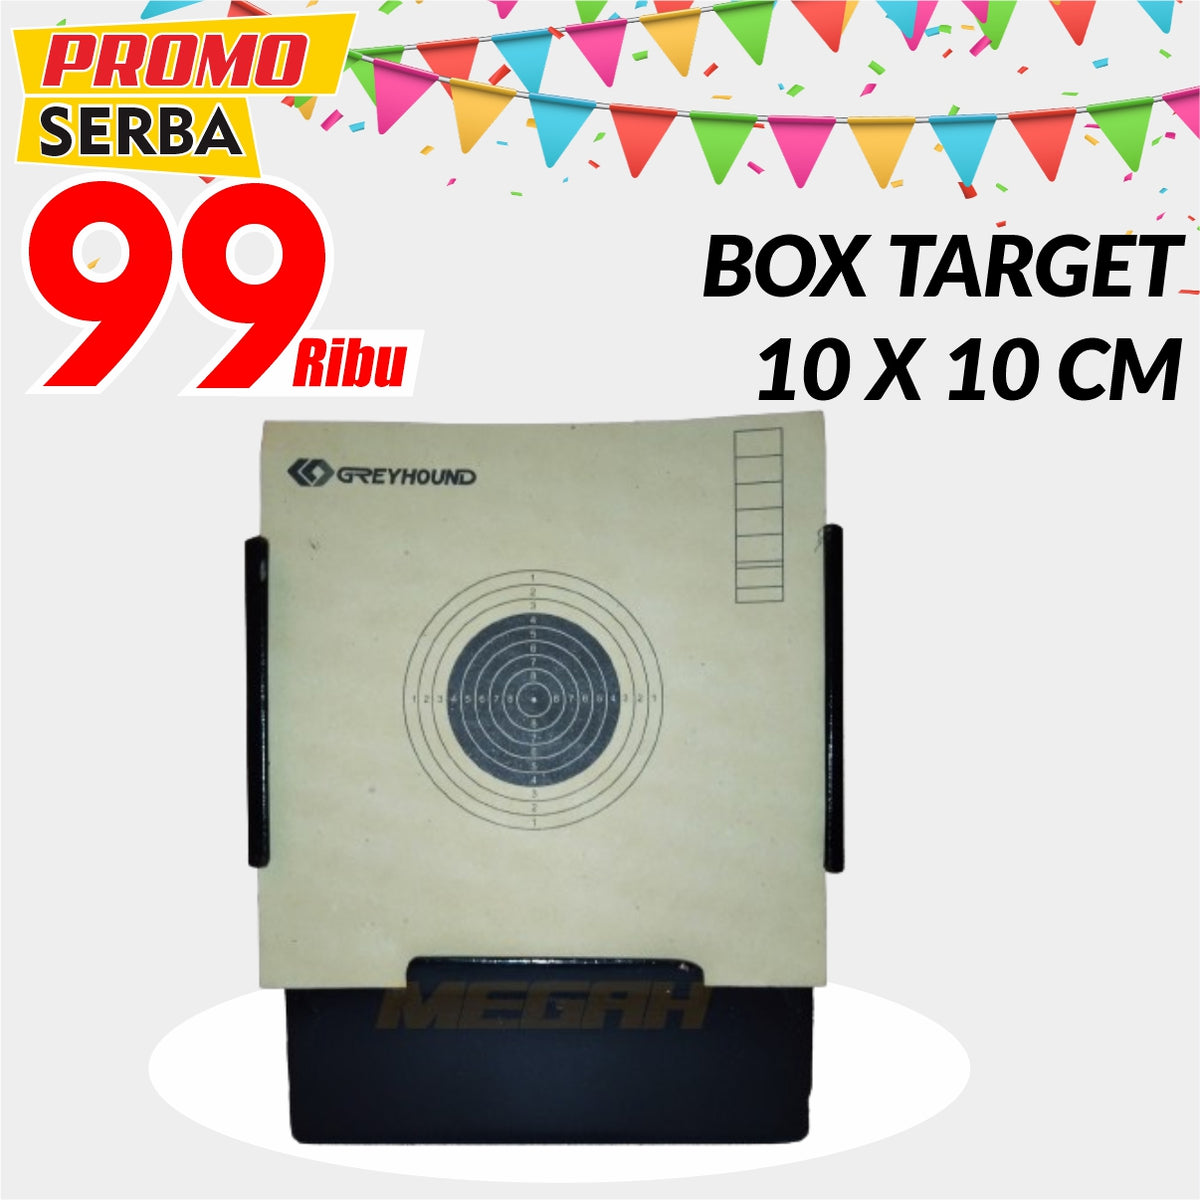 BOX TARGET 10X10 CM